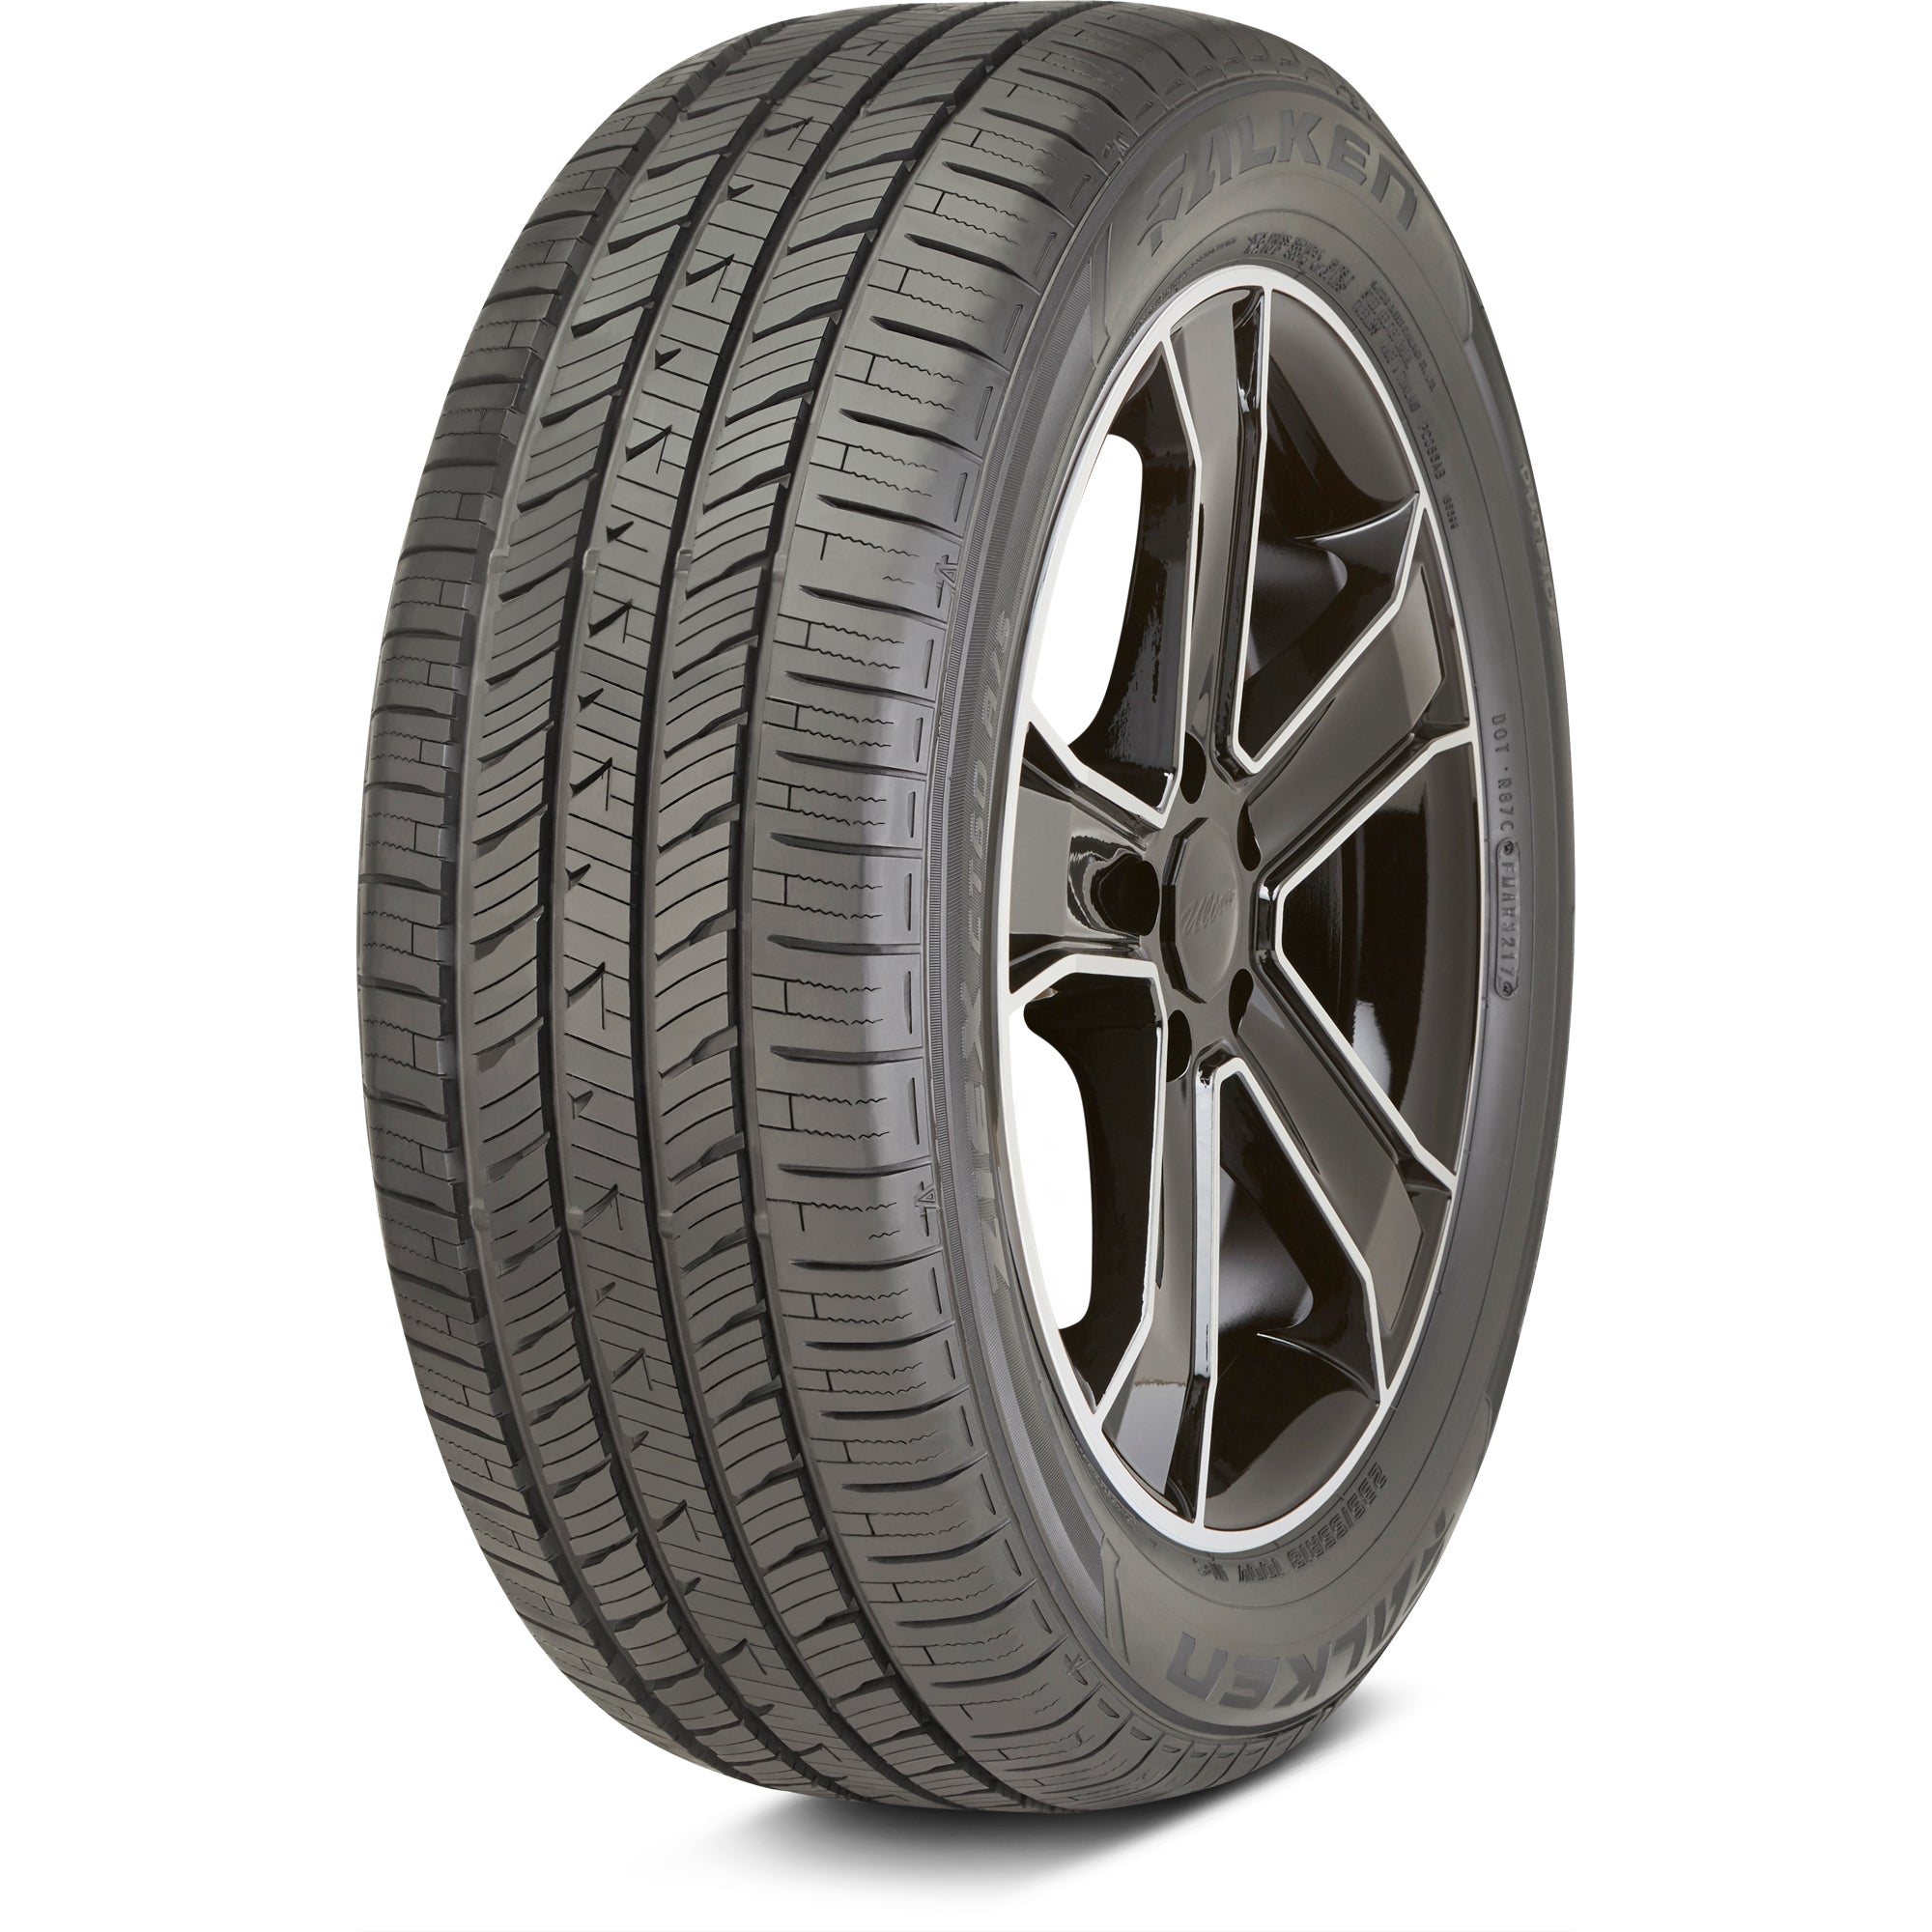 FALKEN ZIEX CT60 A/S 245/60R18 (29.6X9.7R 18) Tires